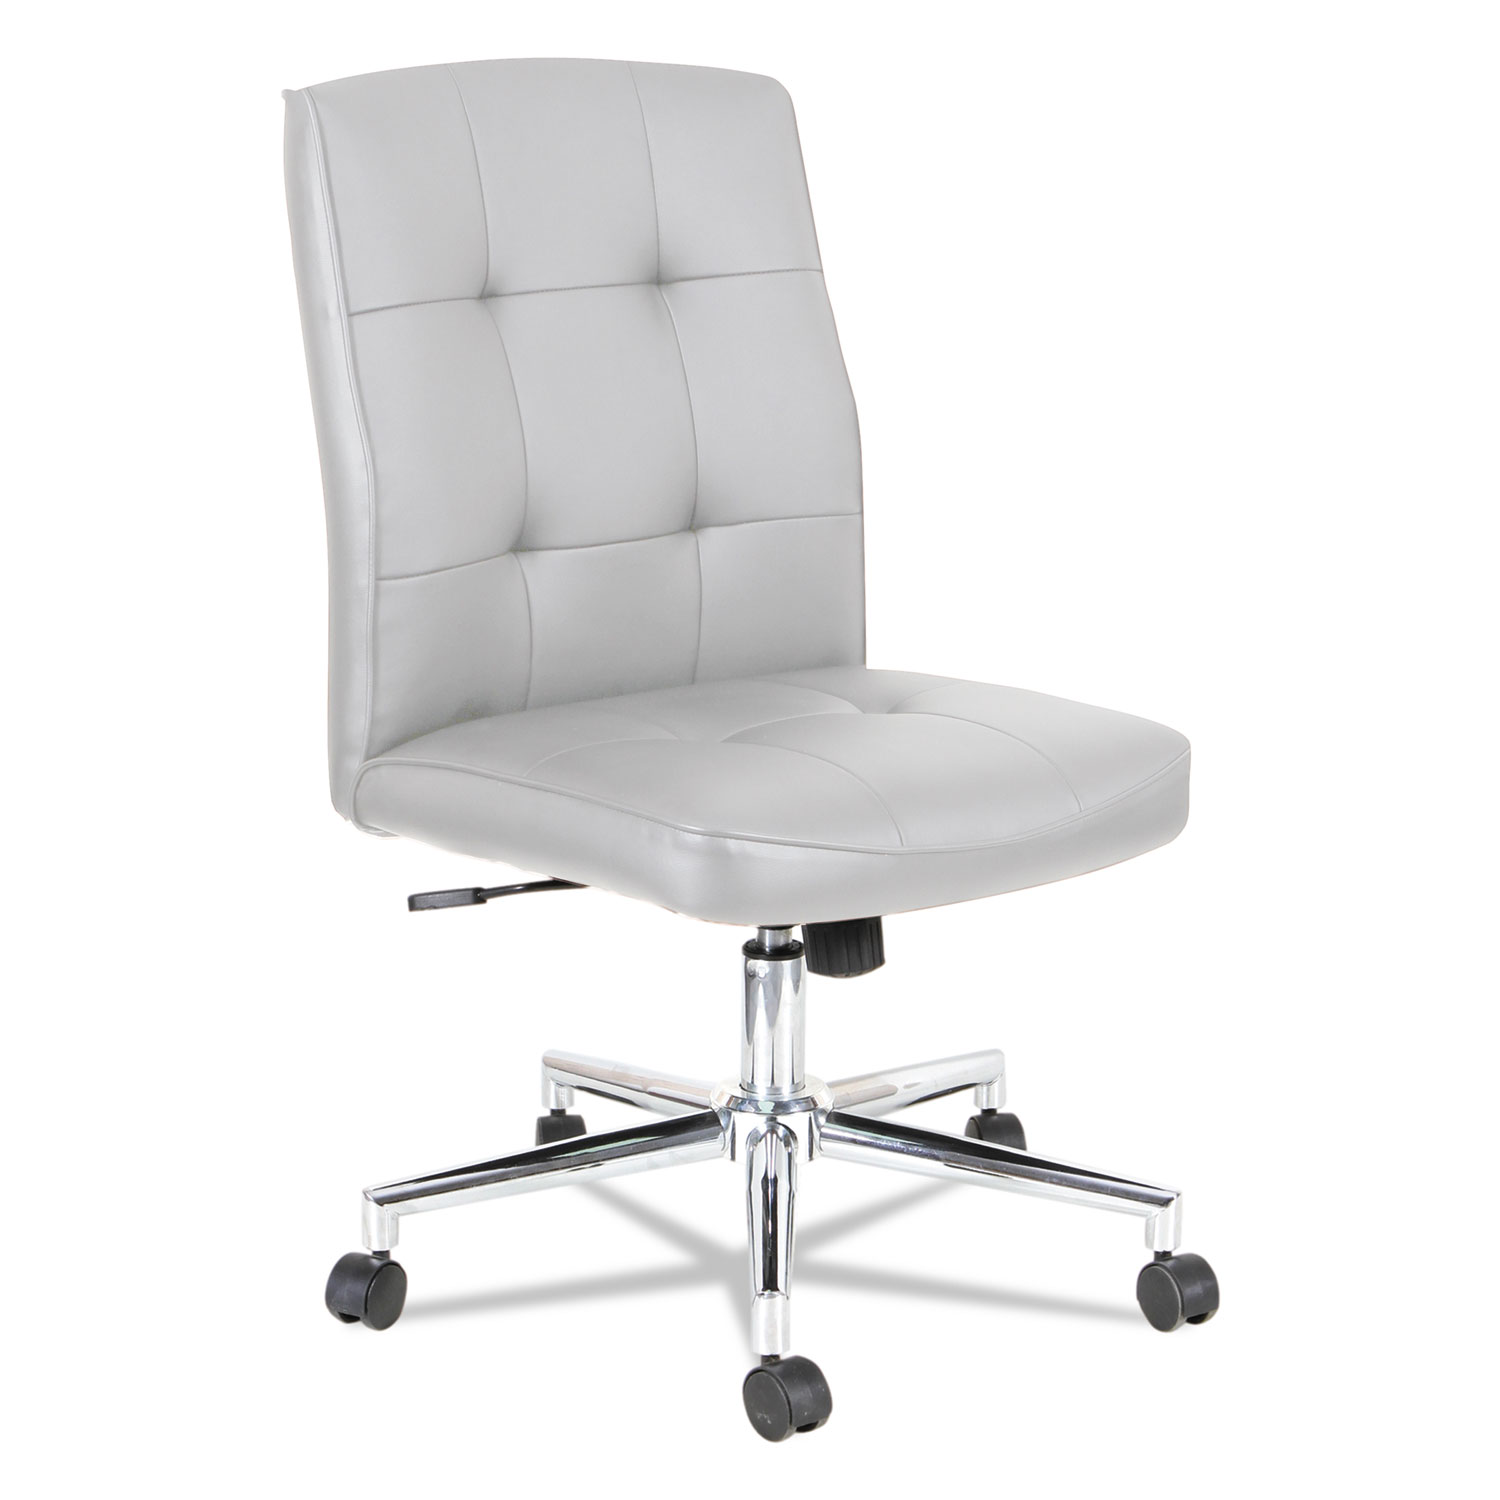  Alera OIFNT4906 Slimline Swivel/Tilt Task Chair, Supports up to 275 lbs., White Seat/White Back, Chrome Base (ALENT4906) 